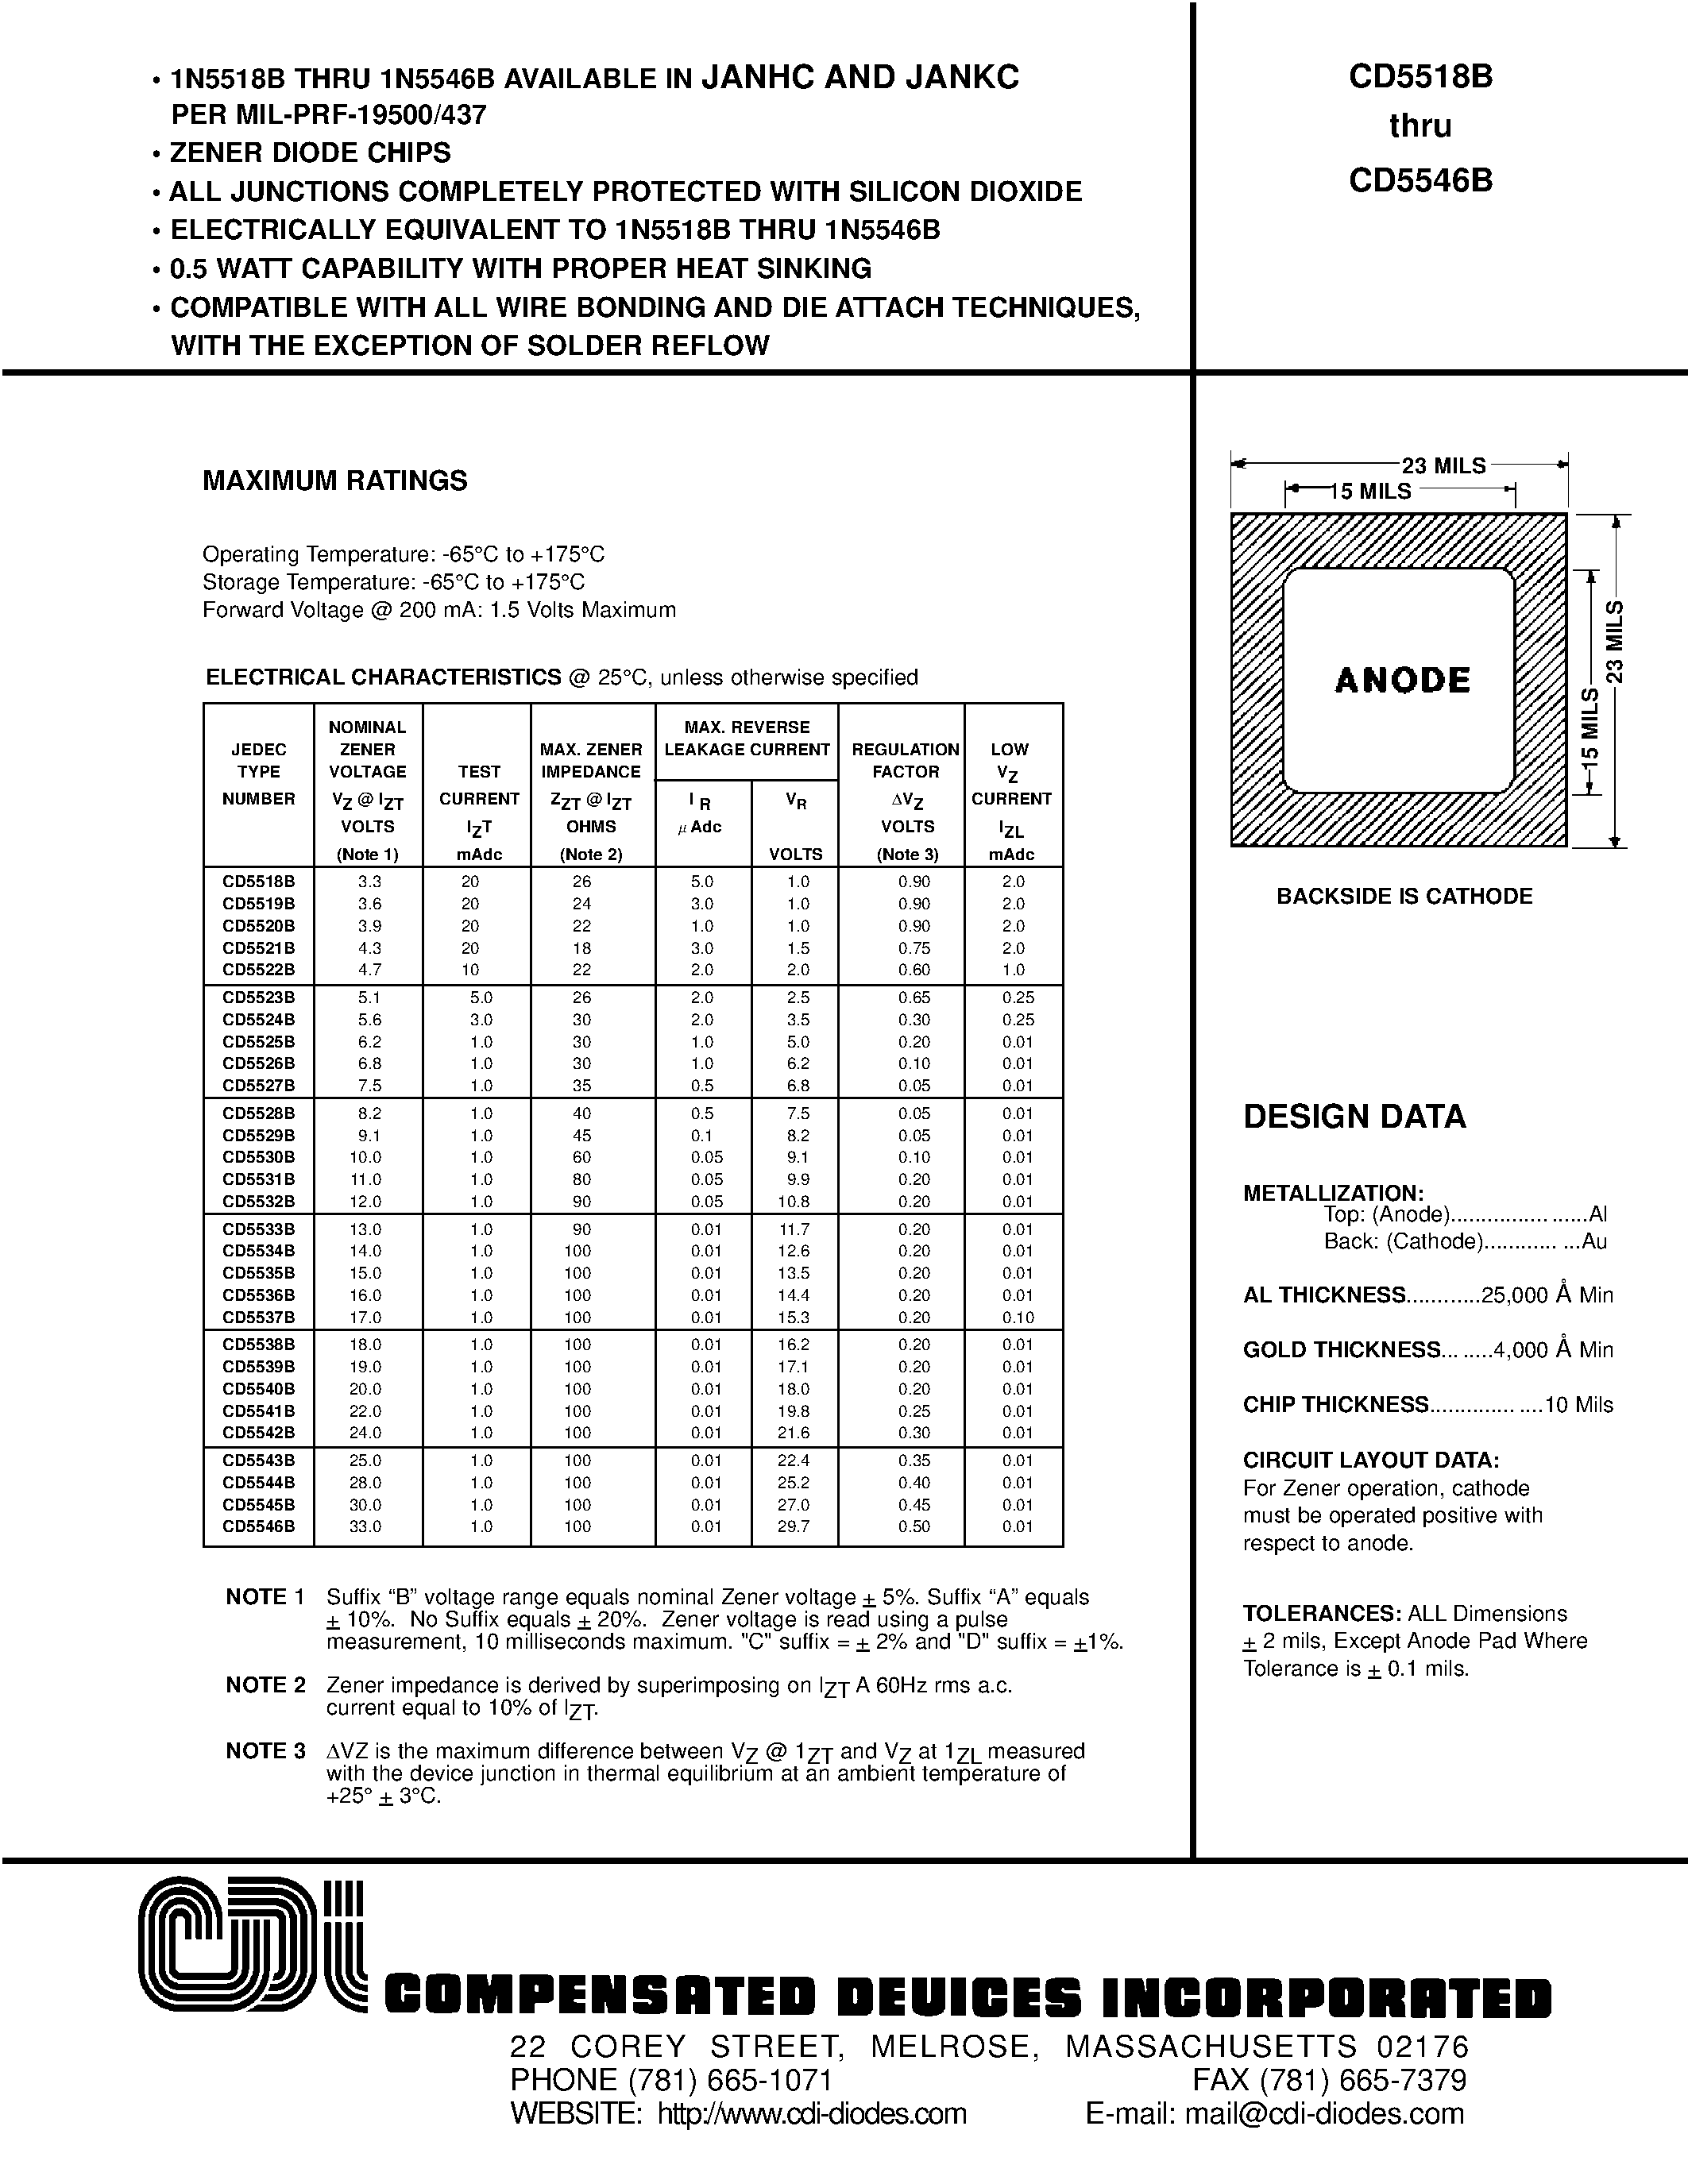 Datasheet CD5545B - ZENER DIODE CHIPS page 1